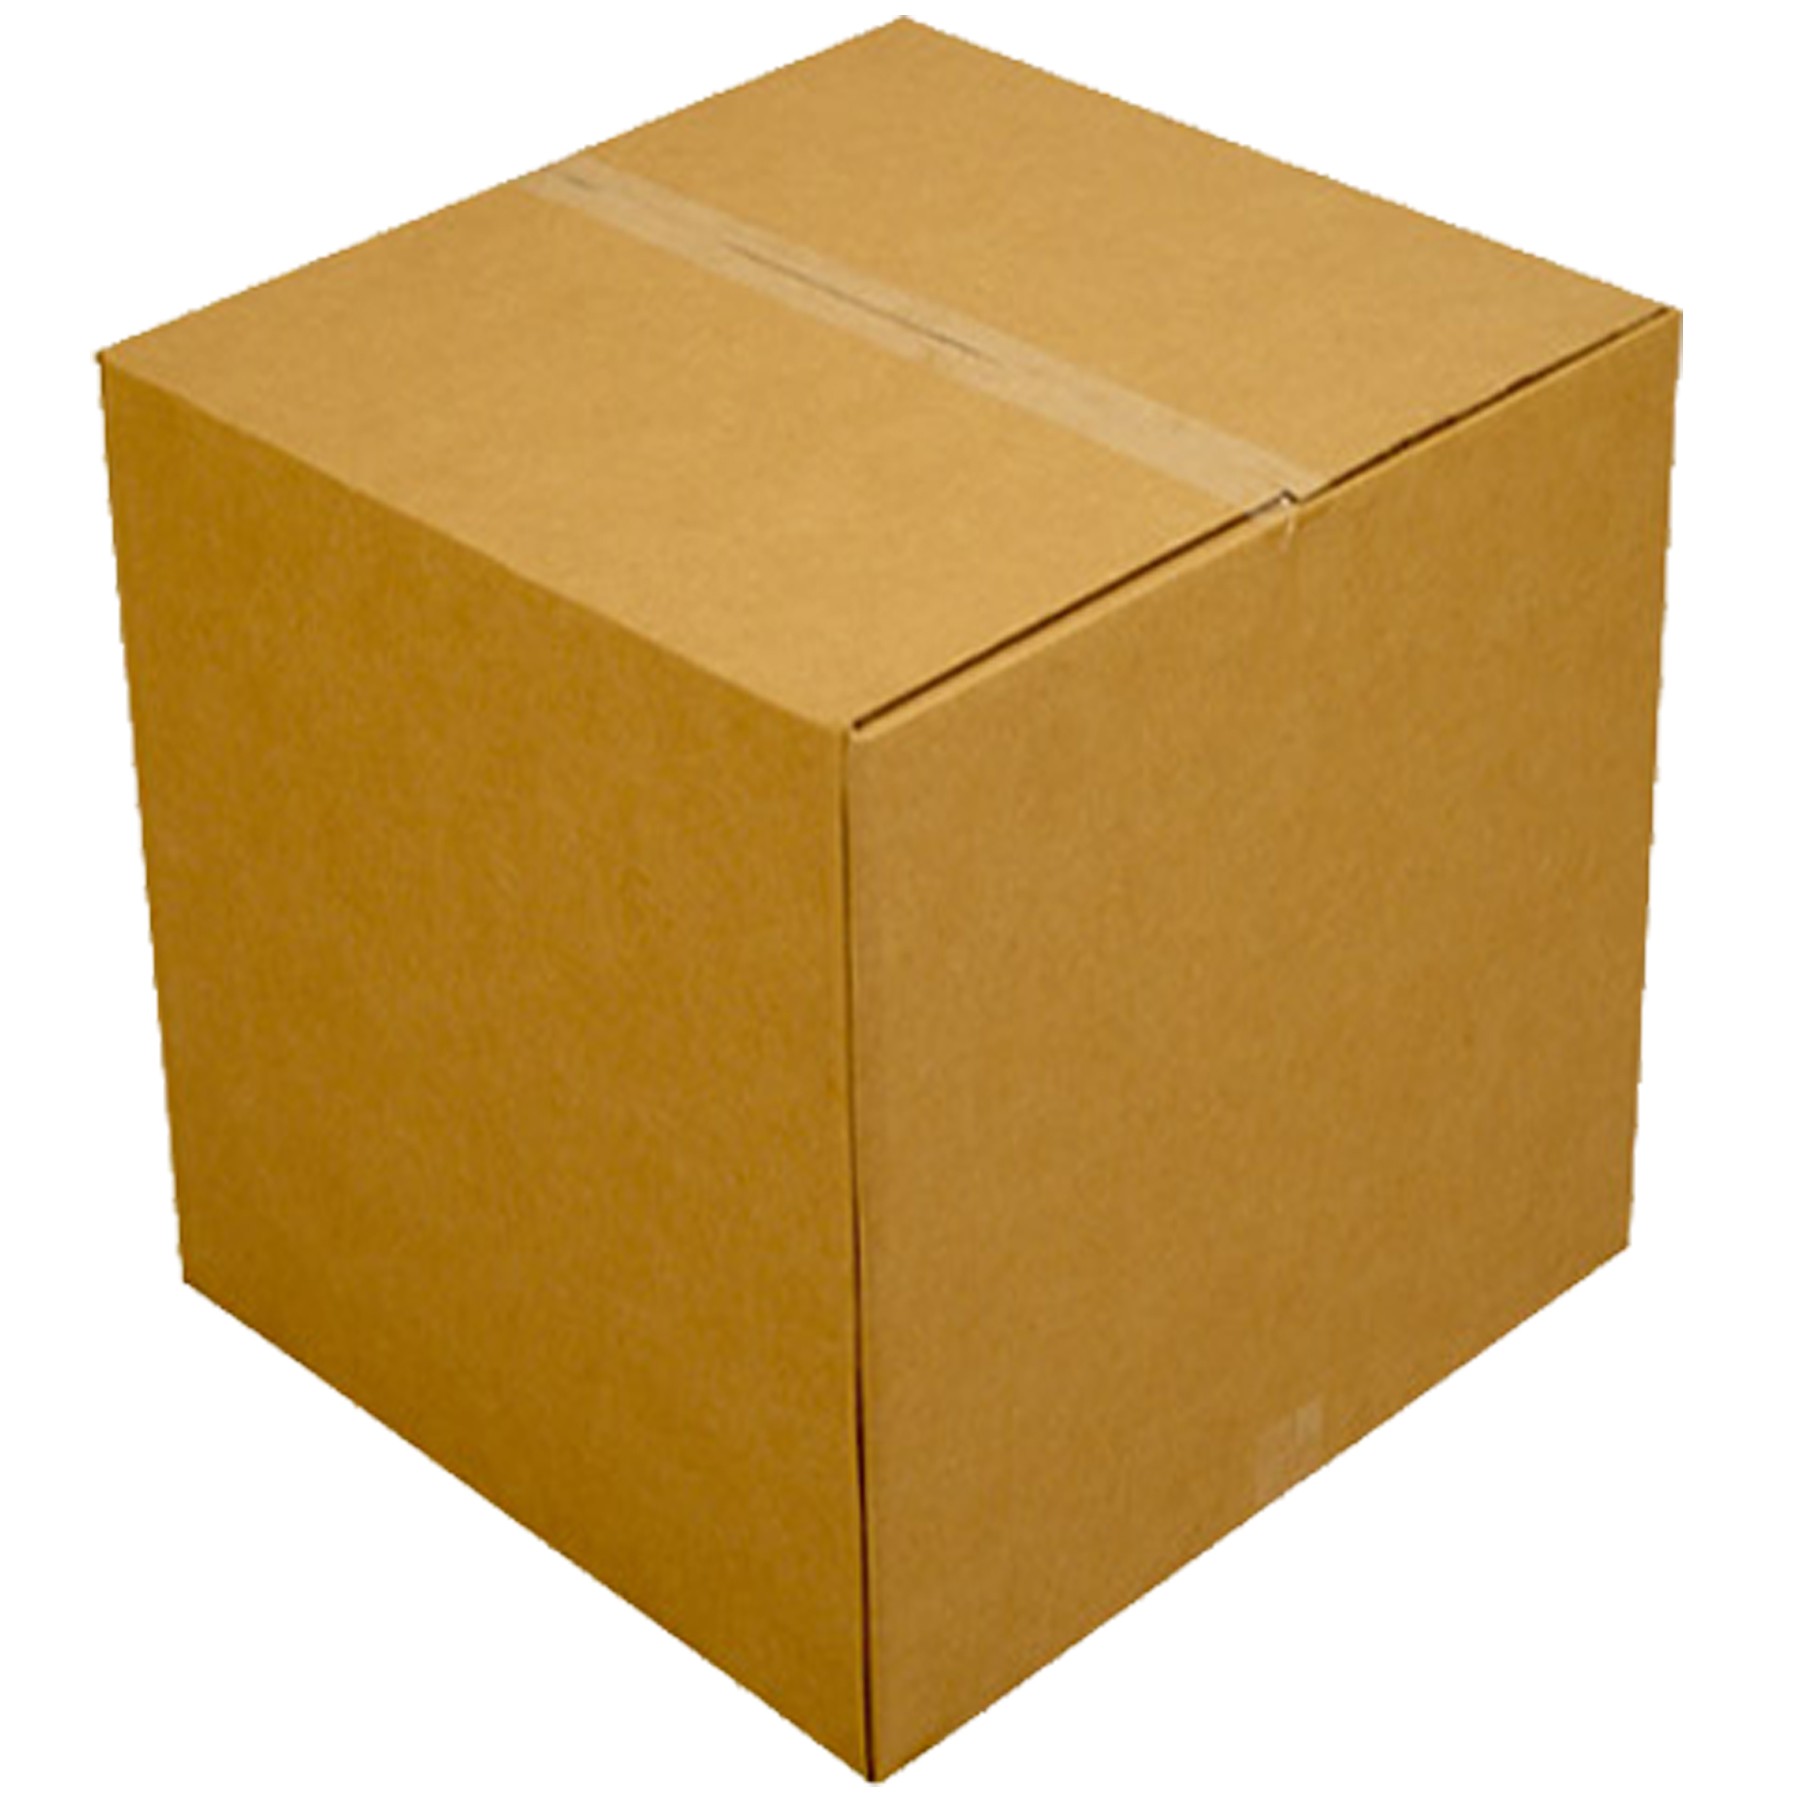 UBOXES BOXMINILAR06 Large Moving Boxes - Qty 6 Moving Boxes - Free Same